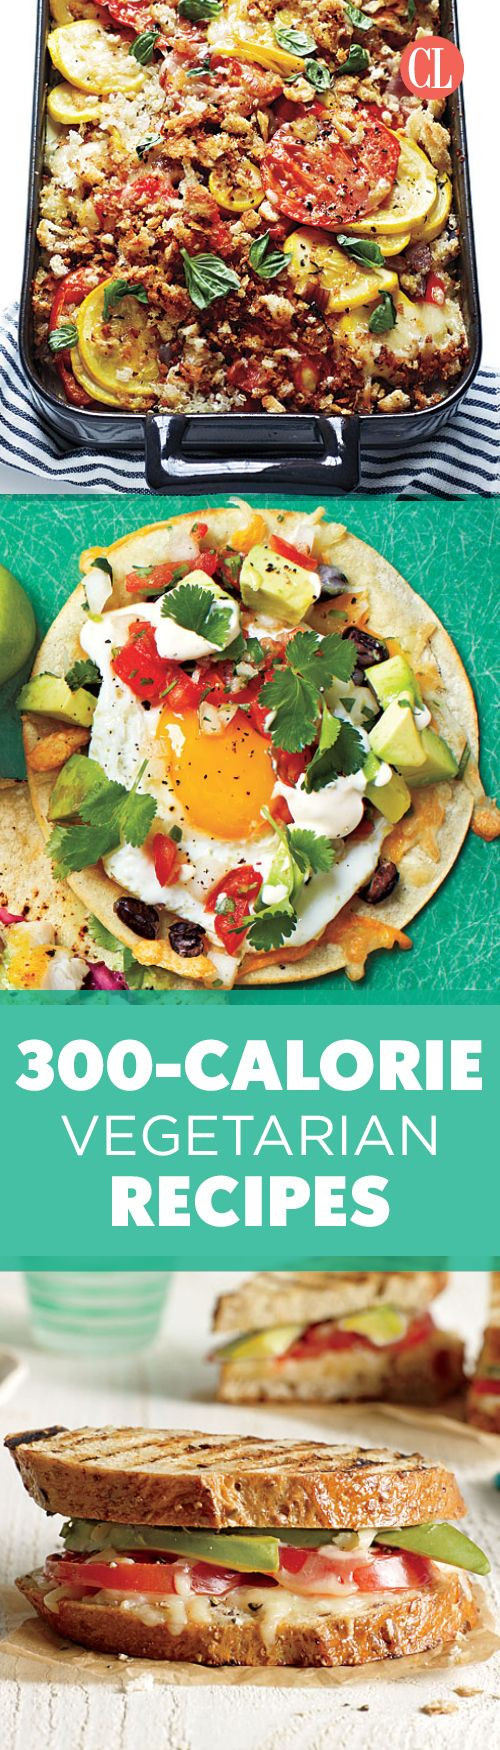 Low Calorie Vegetarian Recipes
 Best 25 Low calorie ve arian recipes ideas on Pinterest